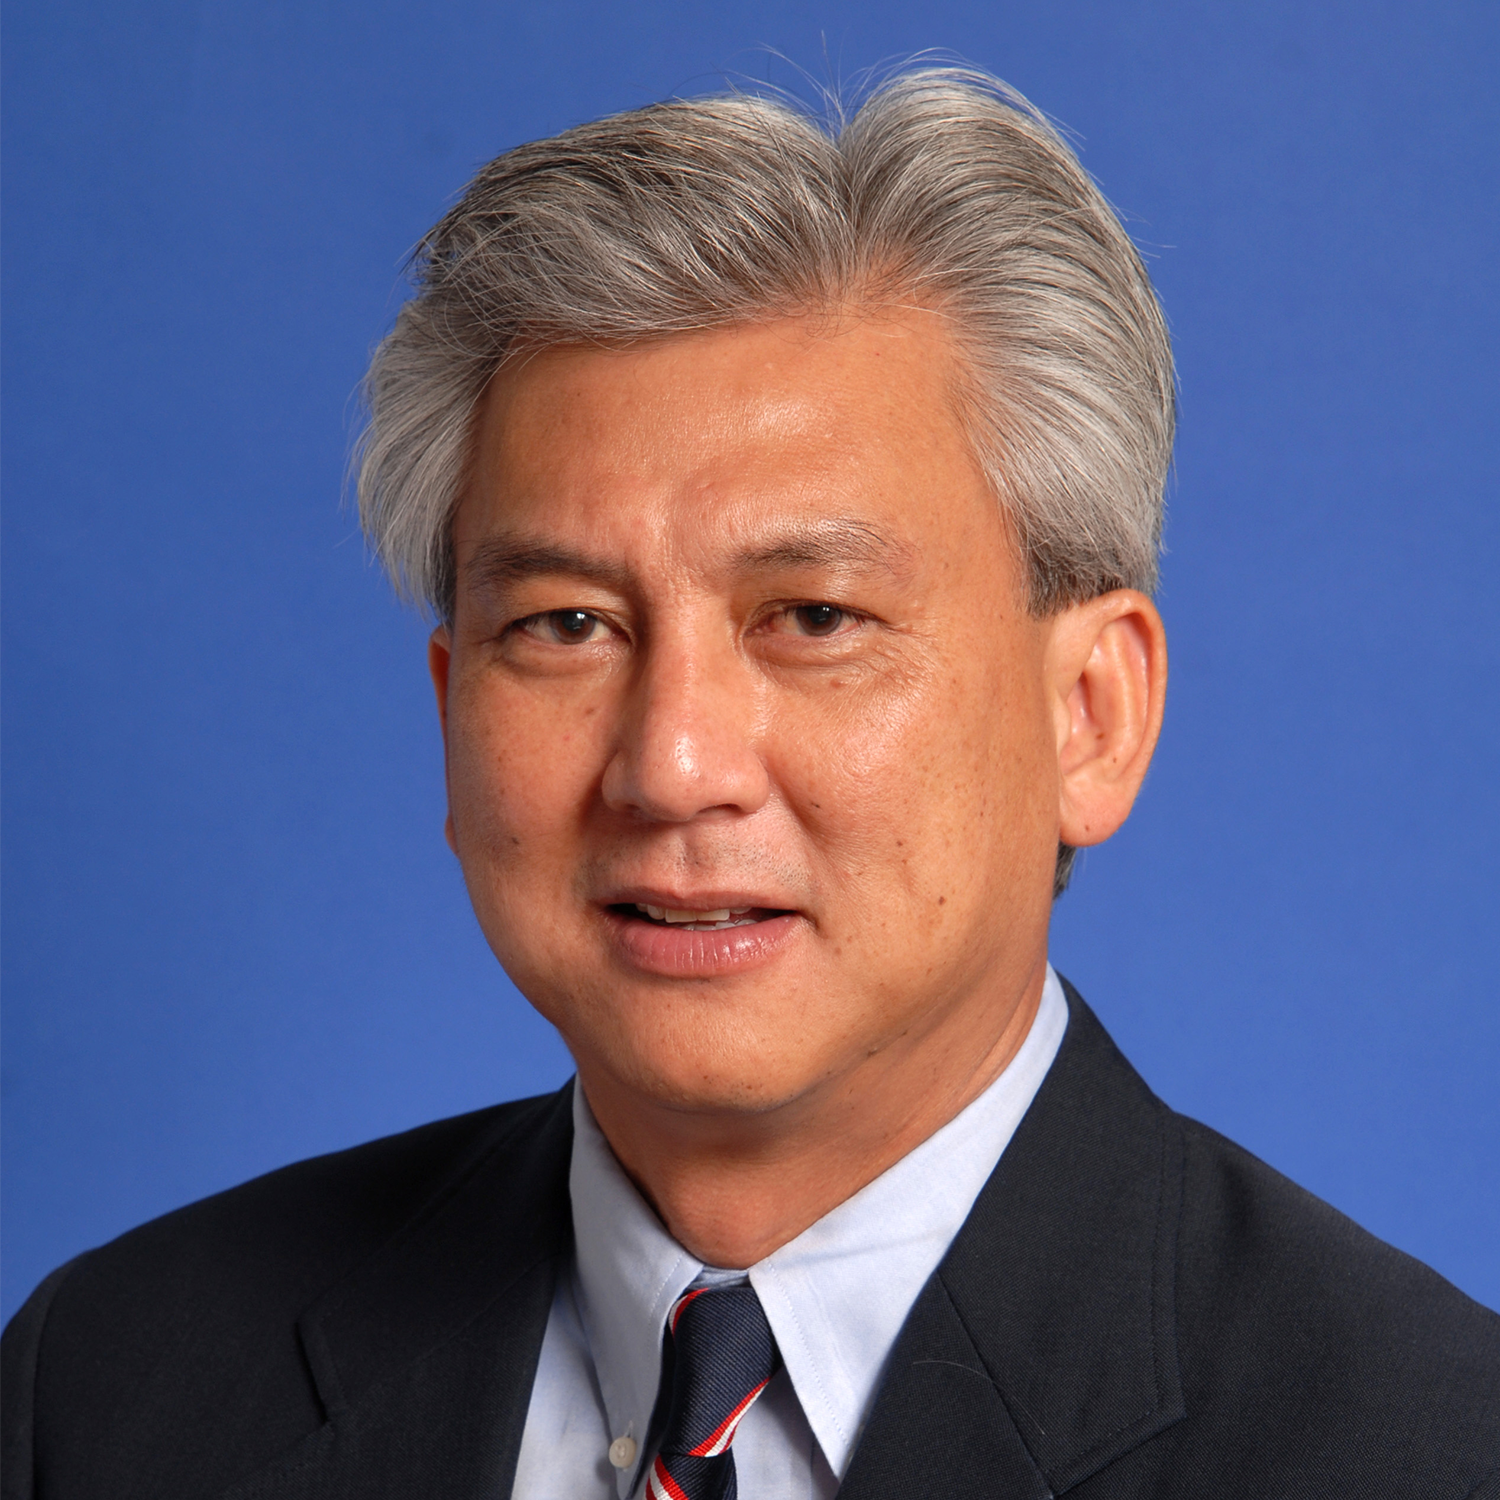 David Tan